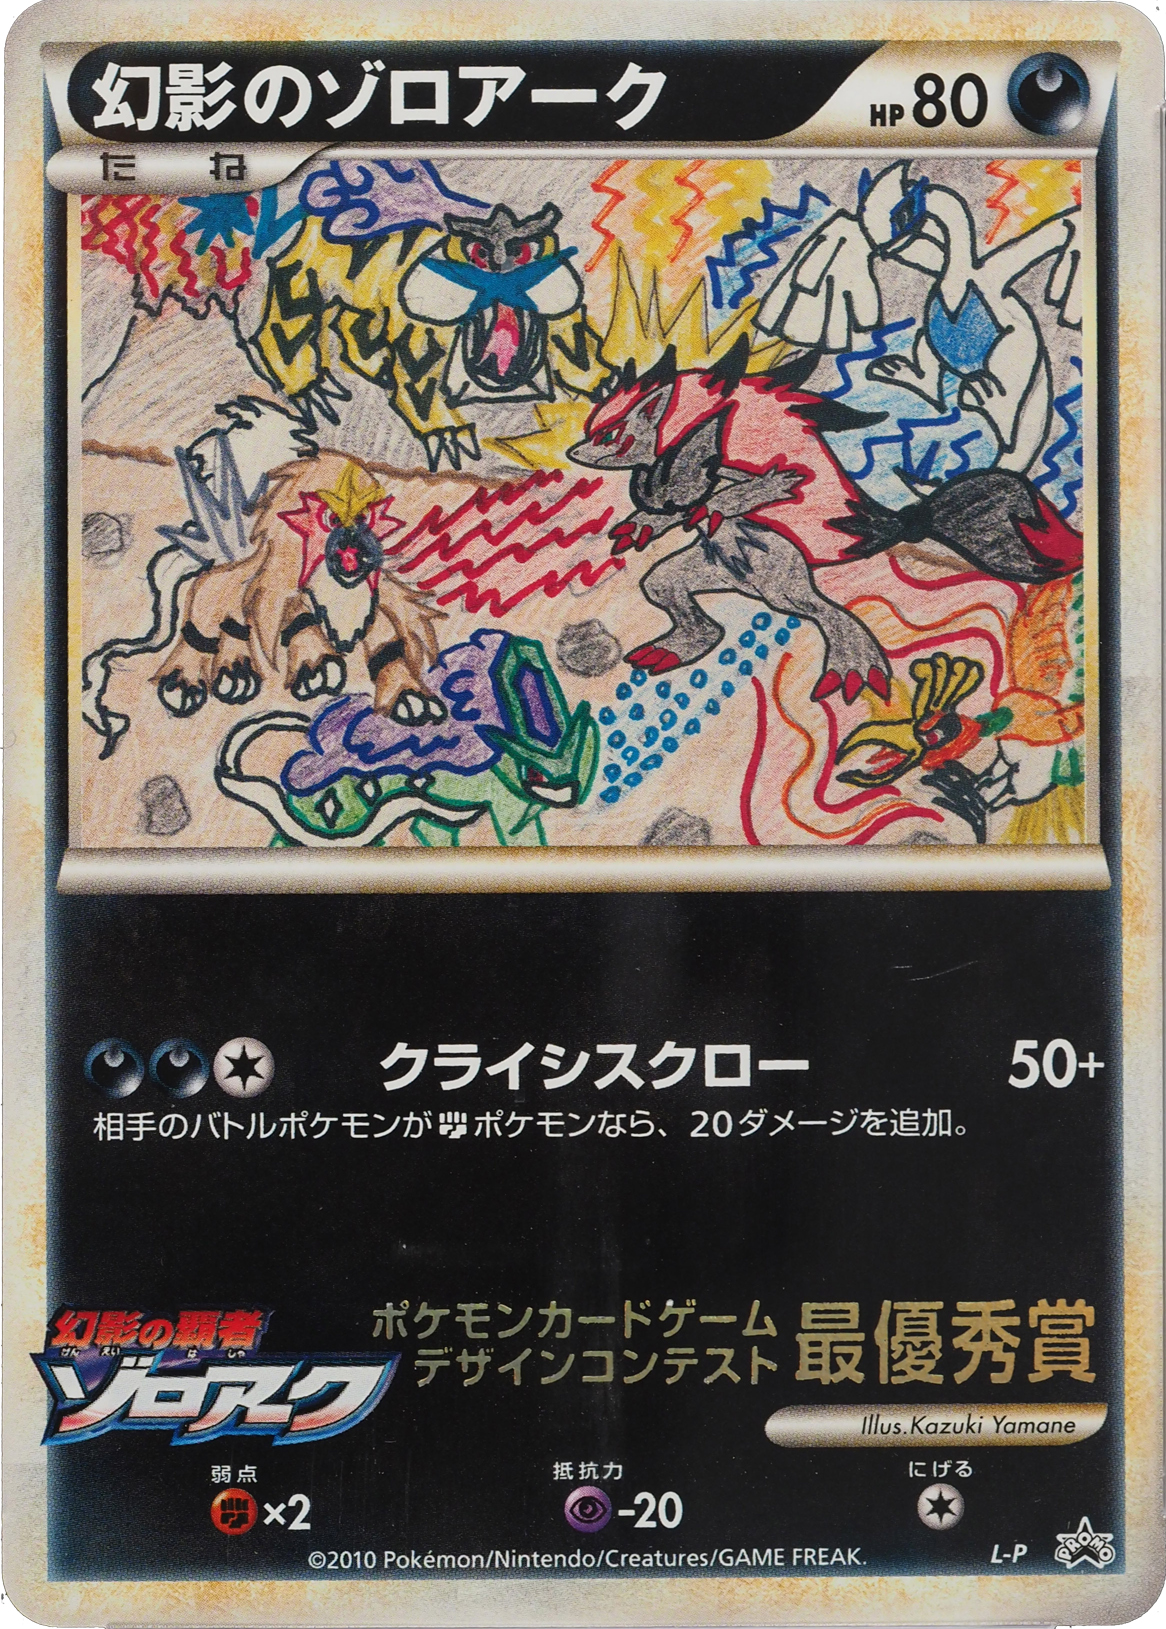 Two Goodies signed by Pokémon Illustrators Sugimori and Nishida